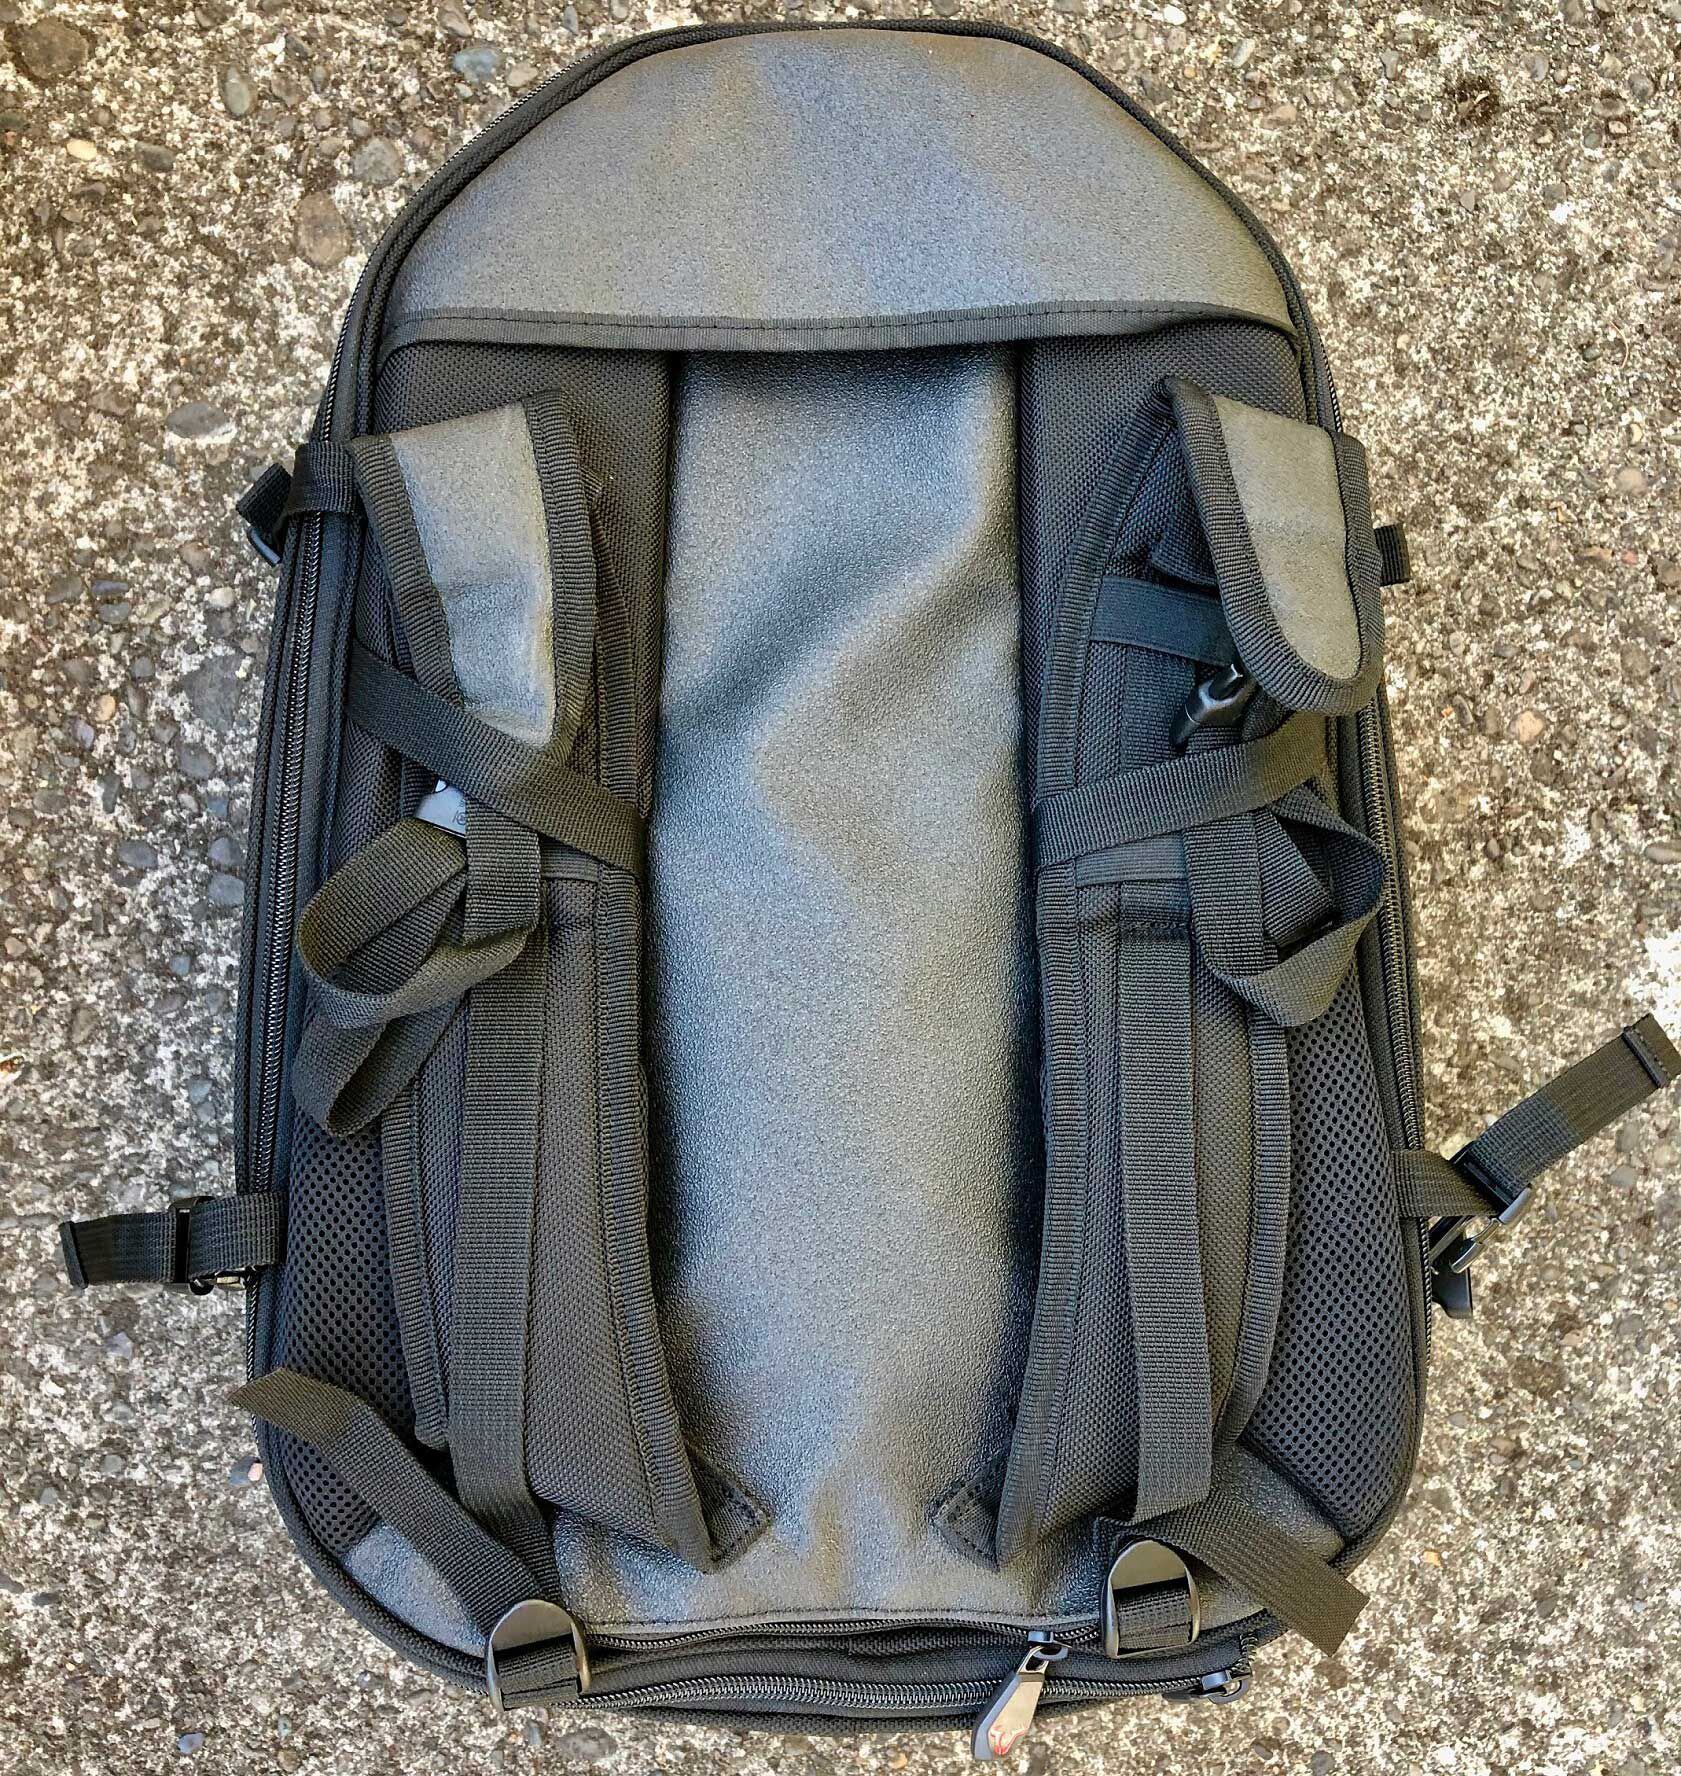 SW-Motech EVO Jetpack Tail Bag Review | LaptrinhX / News